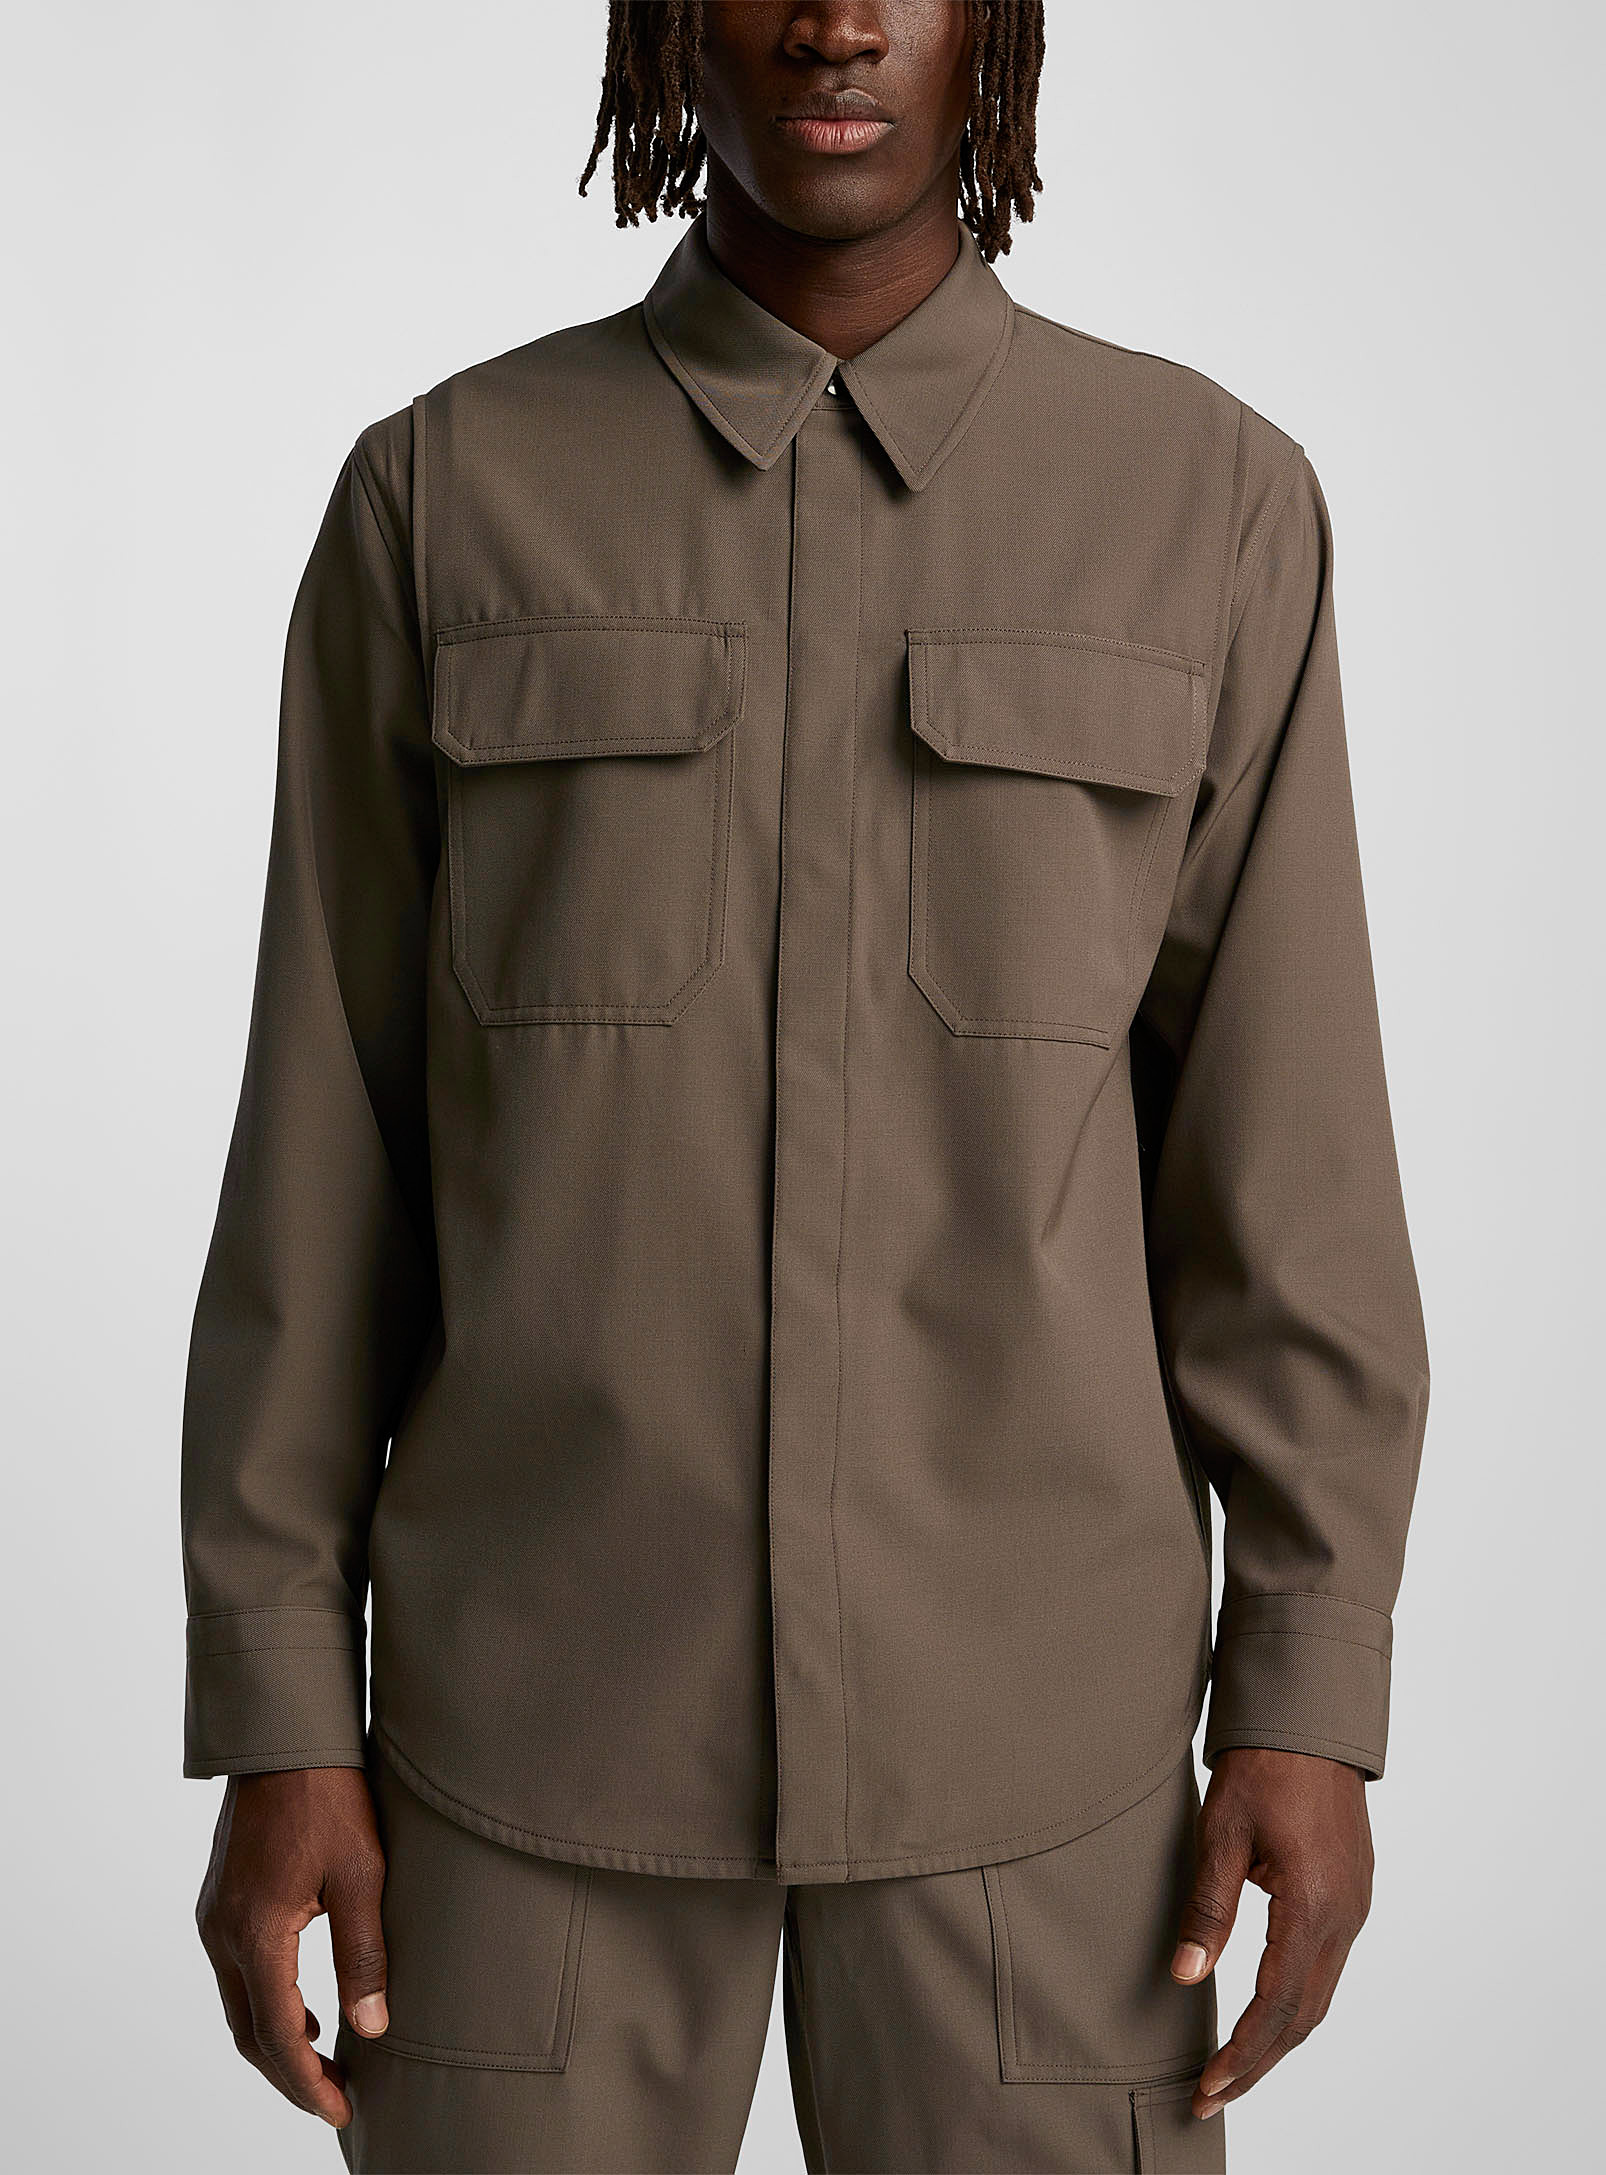 Helmut Lang - Men's Patch pockets military shirt